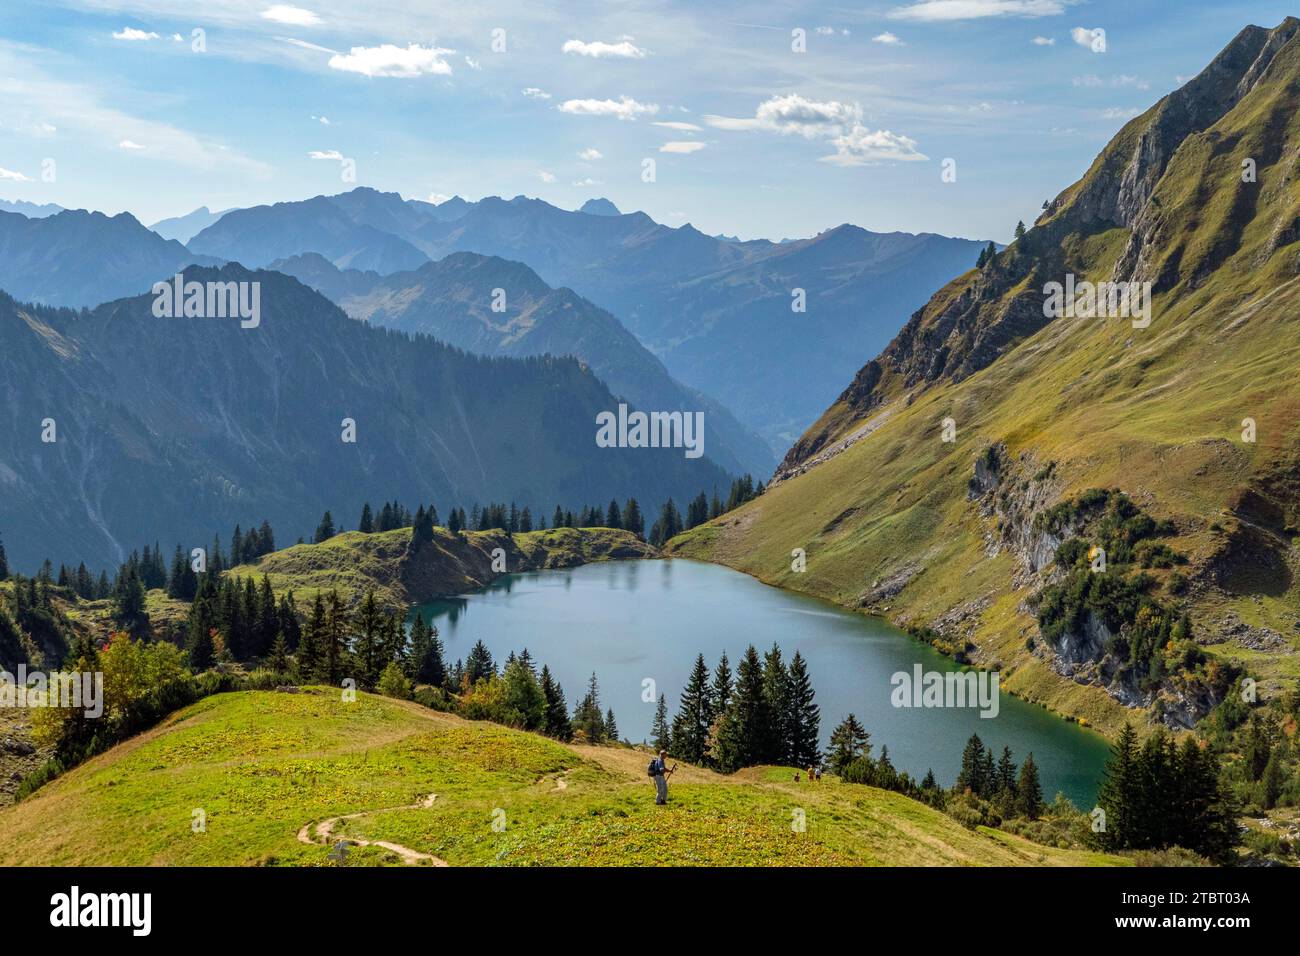 Hiking allgaeu nebelhorn hi-res stock photography and images - Alamy